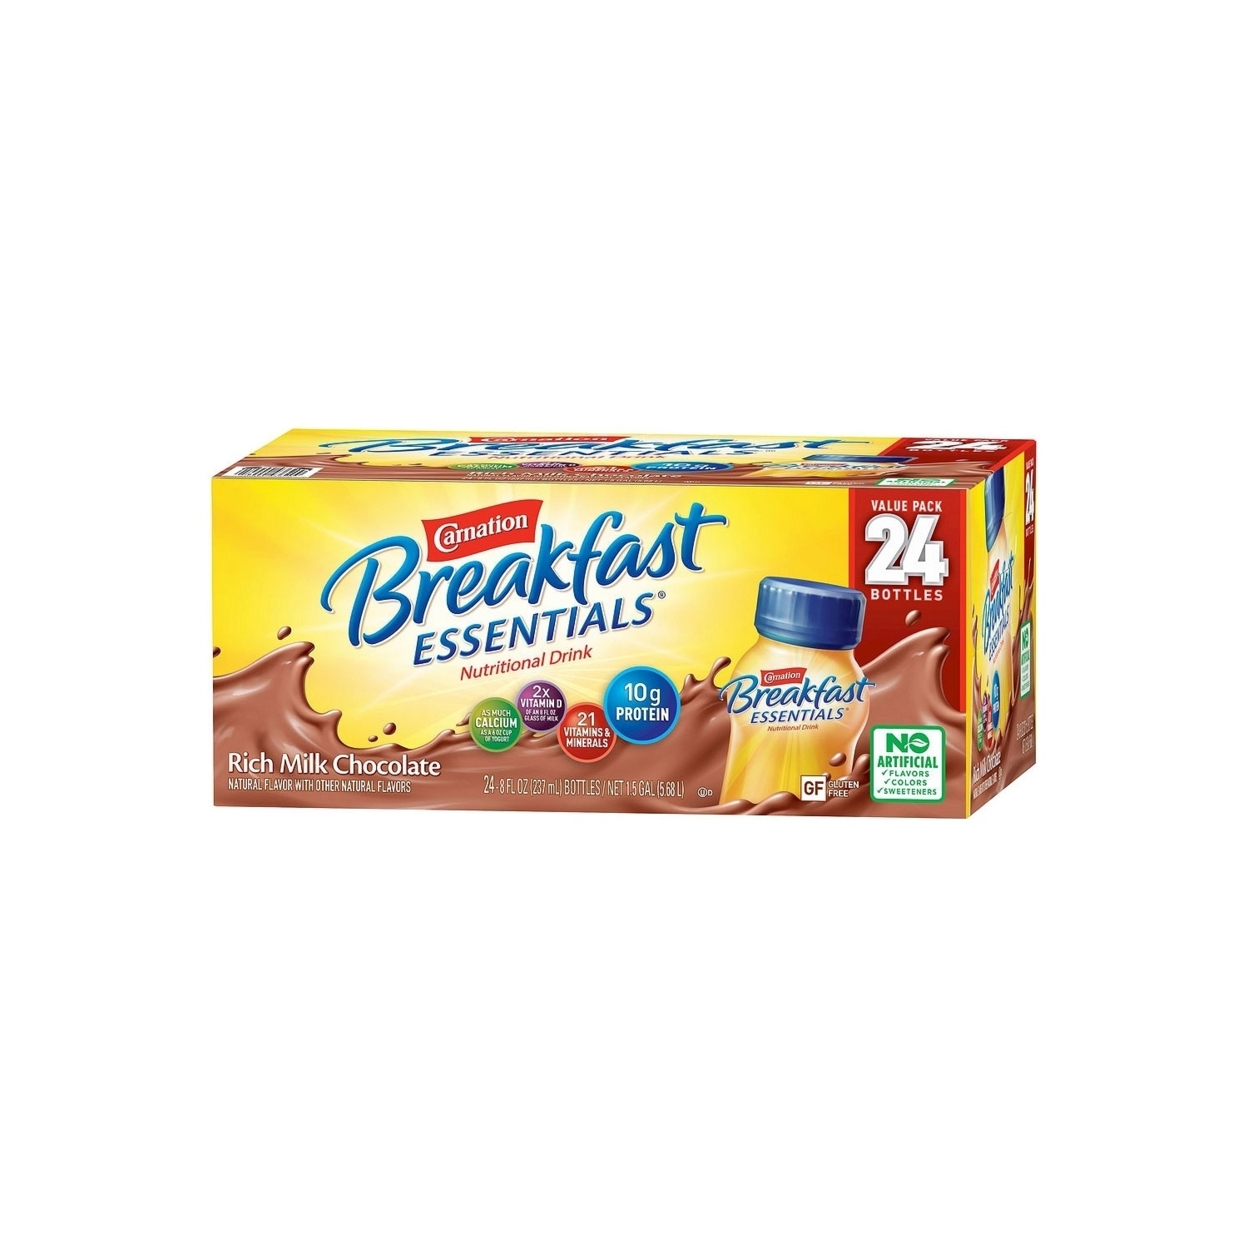 Carnation Breakfast Essentials RTD, Rich Milk Chocolate (8 Ounce, 24 Pack)